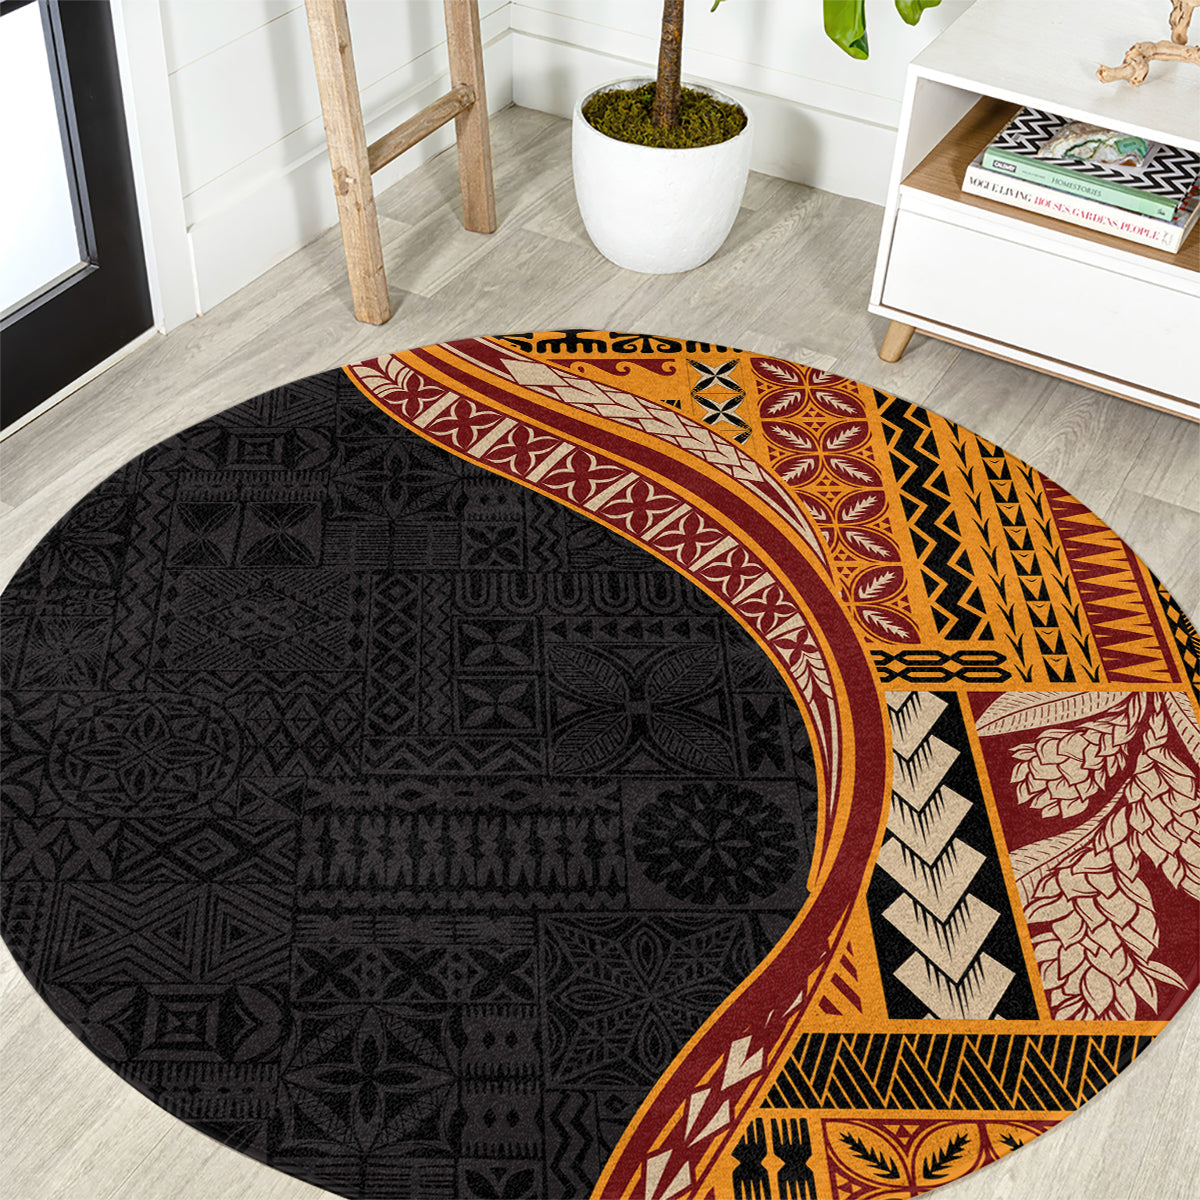 Samoa Siapo Motif and Tapa Pattern Half Style Round Carpet Yellow Color